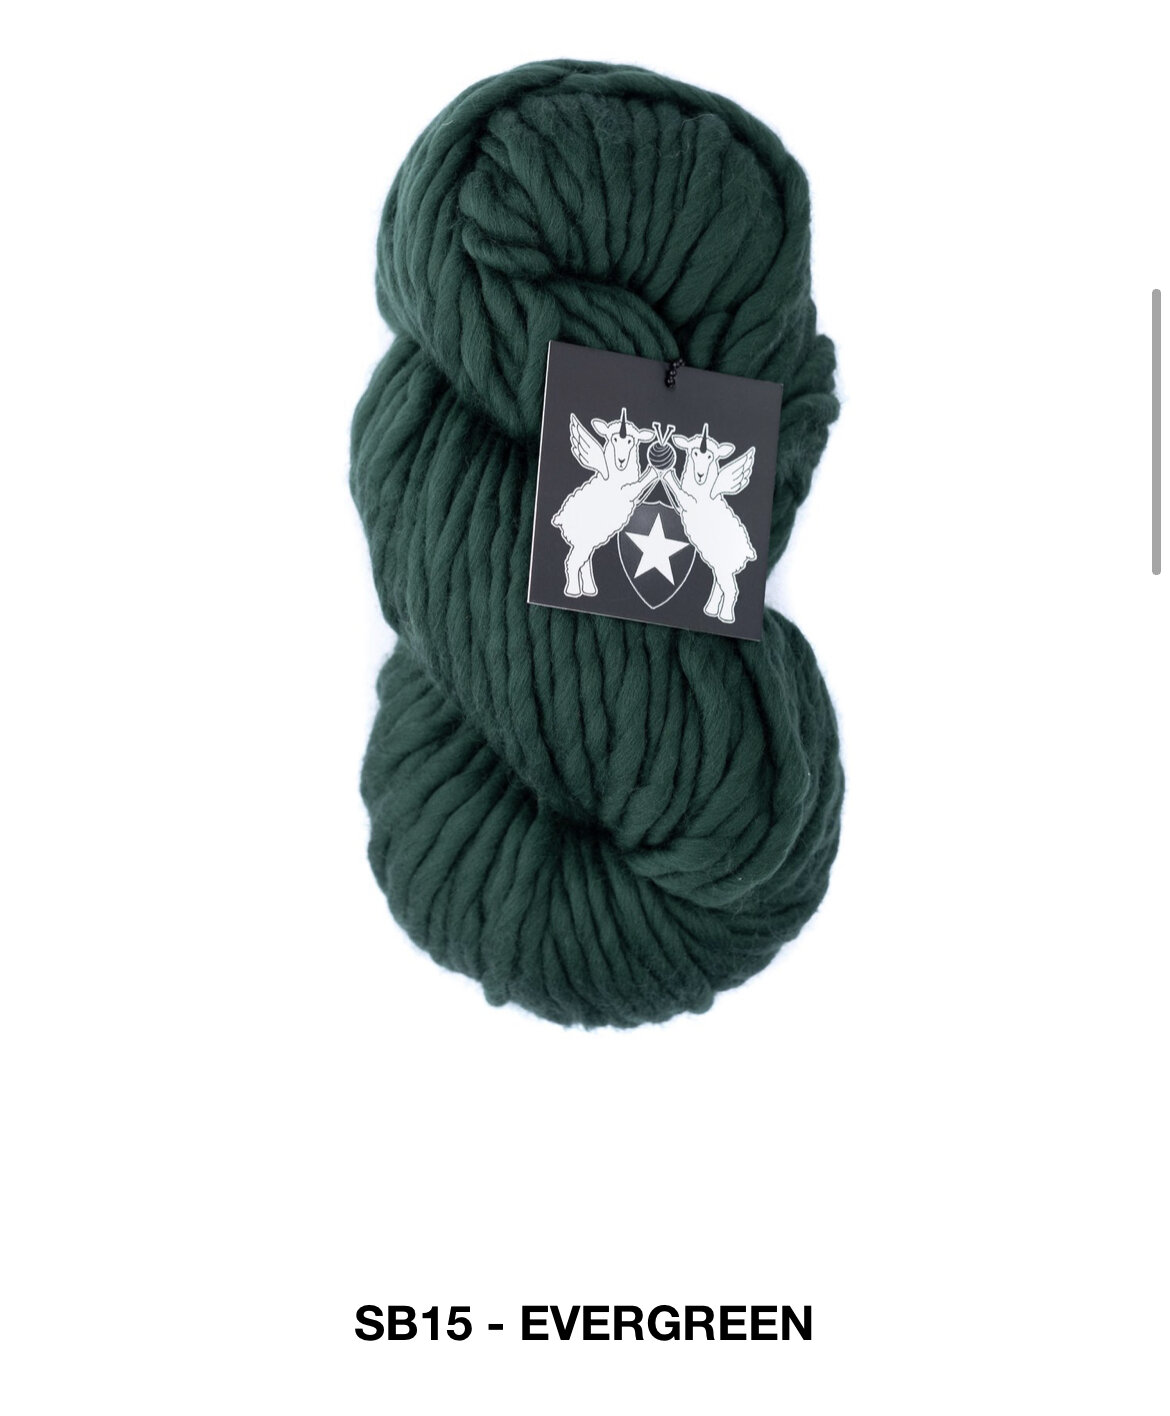 Burnt Orange Yarn, Super Chunky Merino Wool, Yarn for Knitting